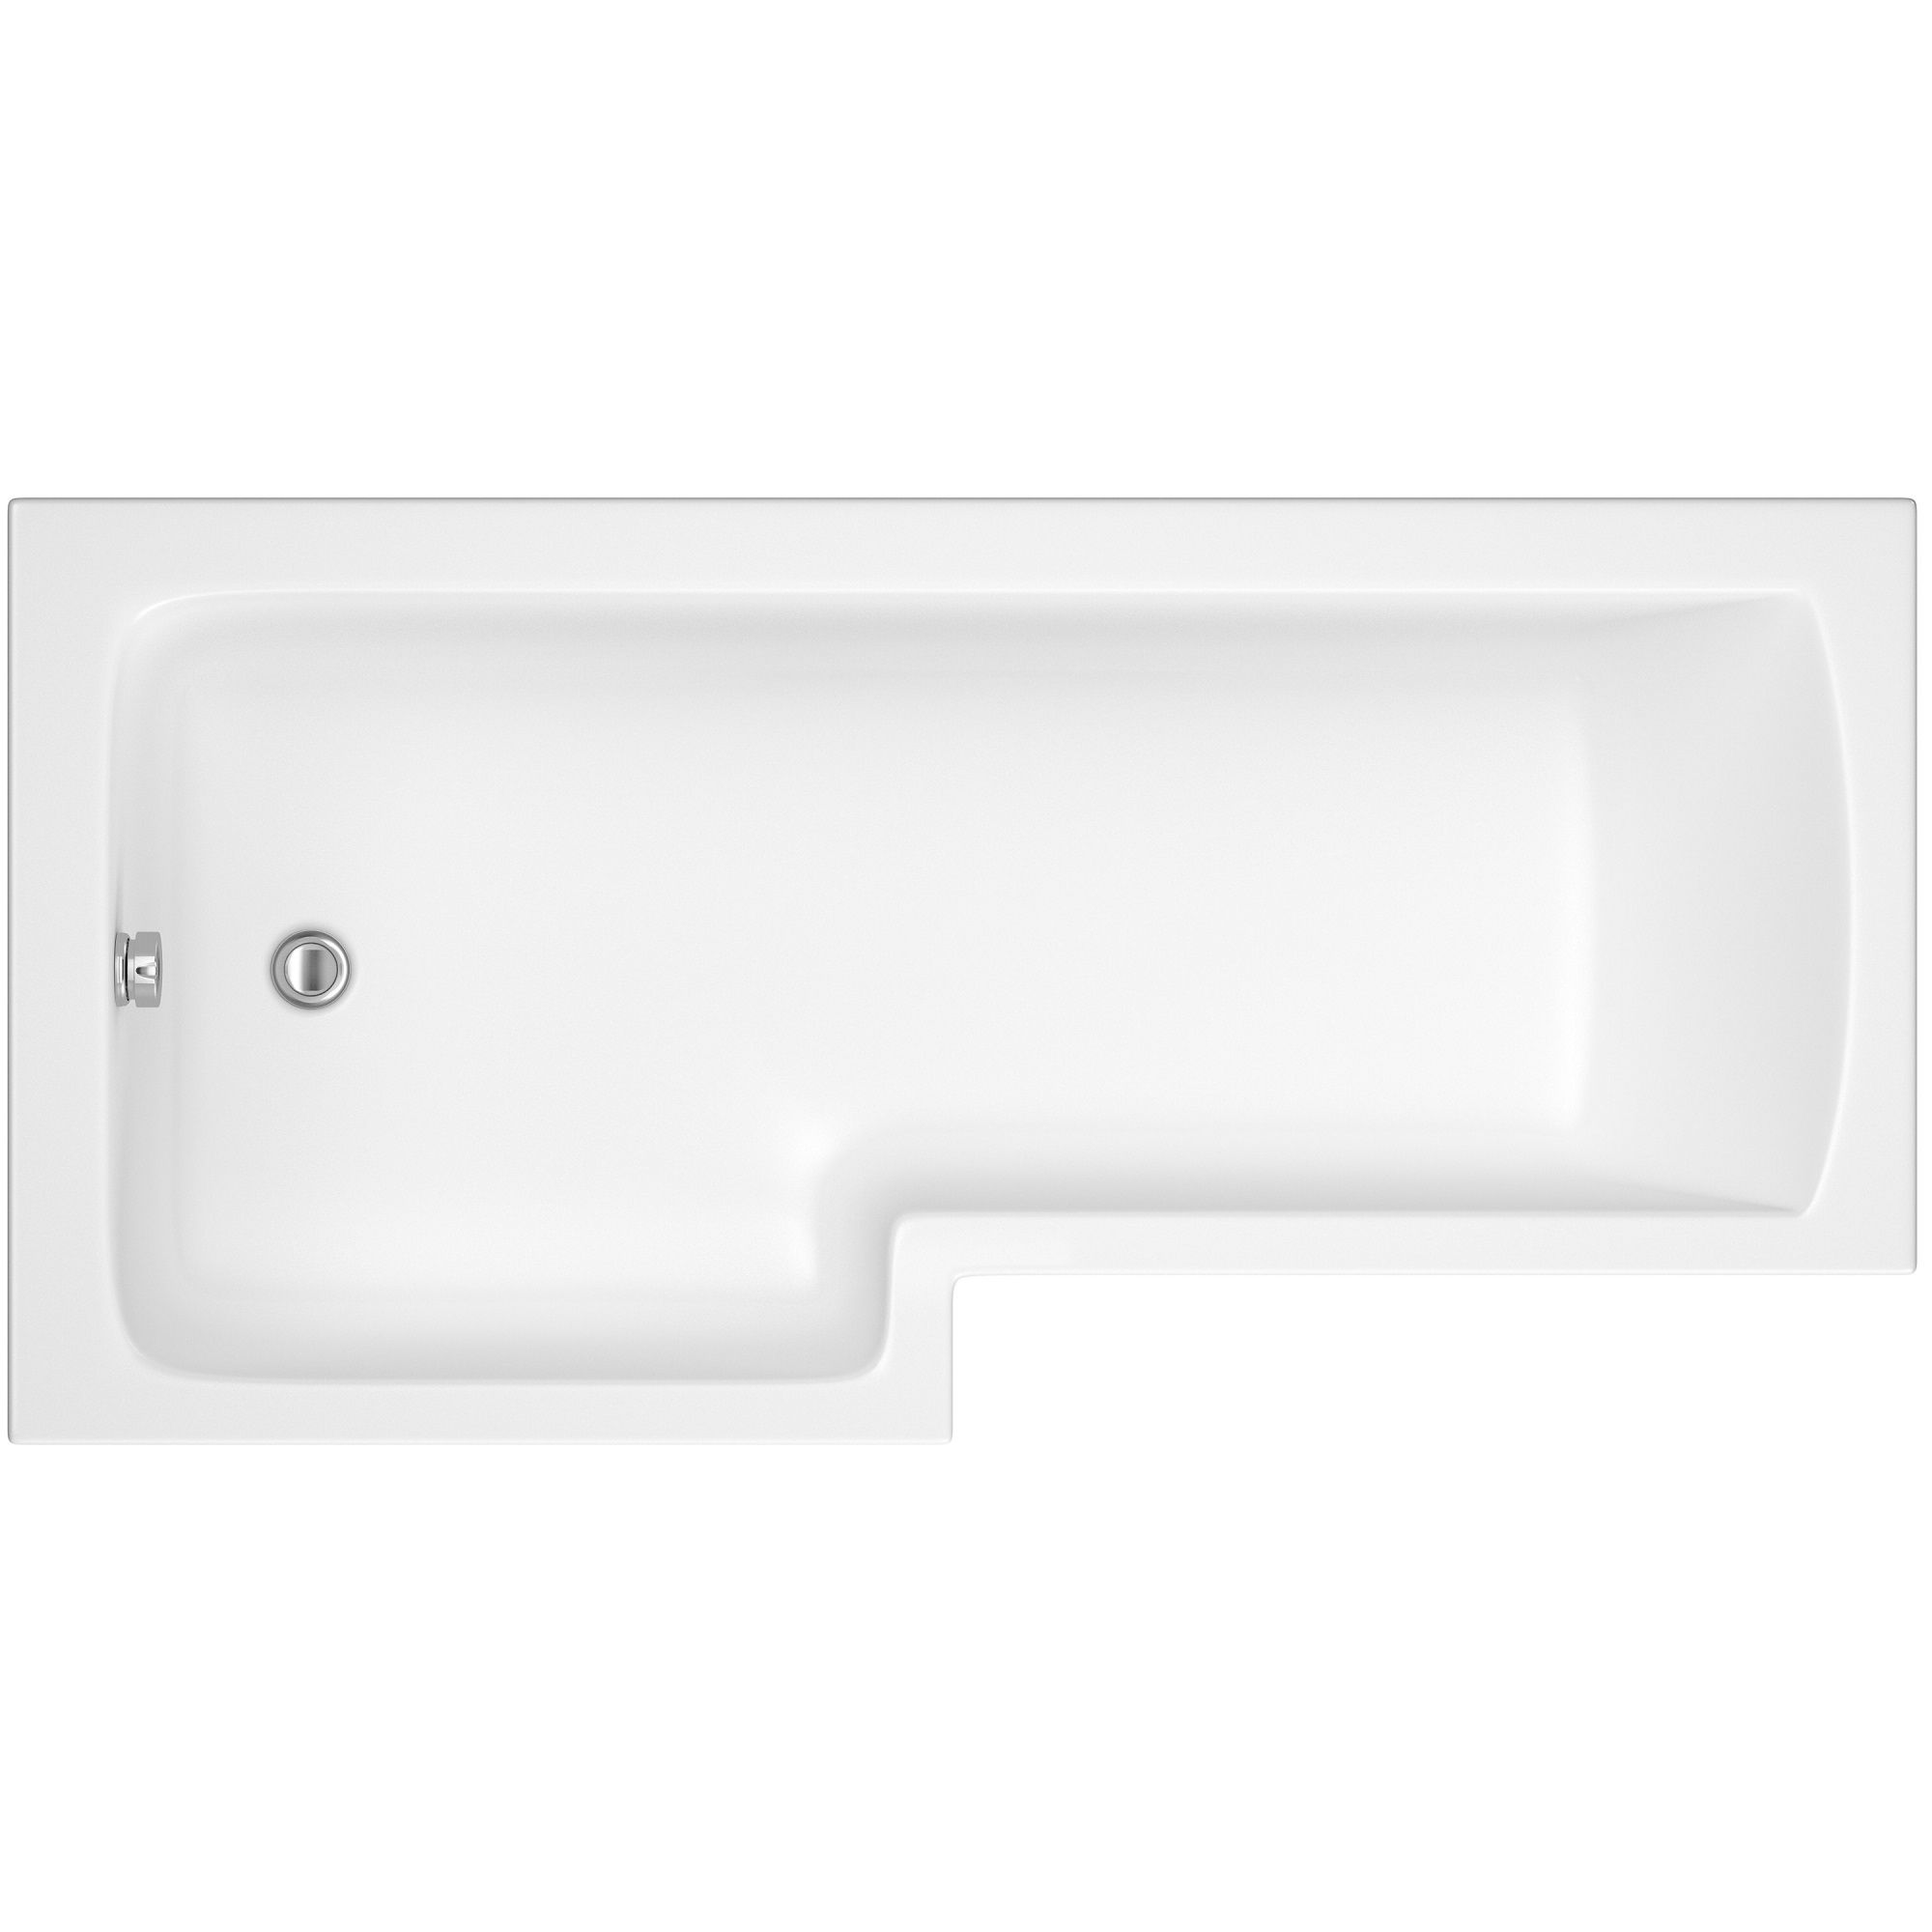 Cooke & Lewis Solarna White L-shaped Left-handed Shower Bath, panel & screen set